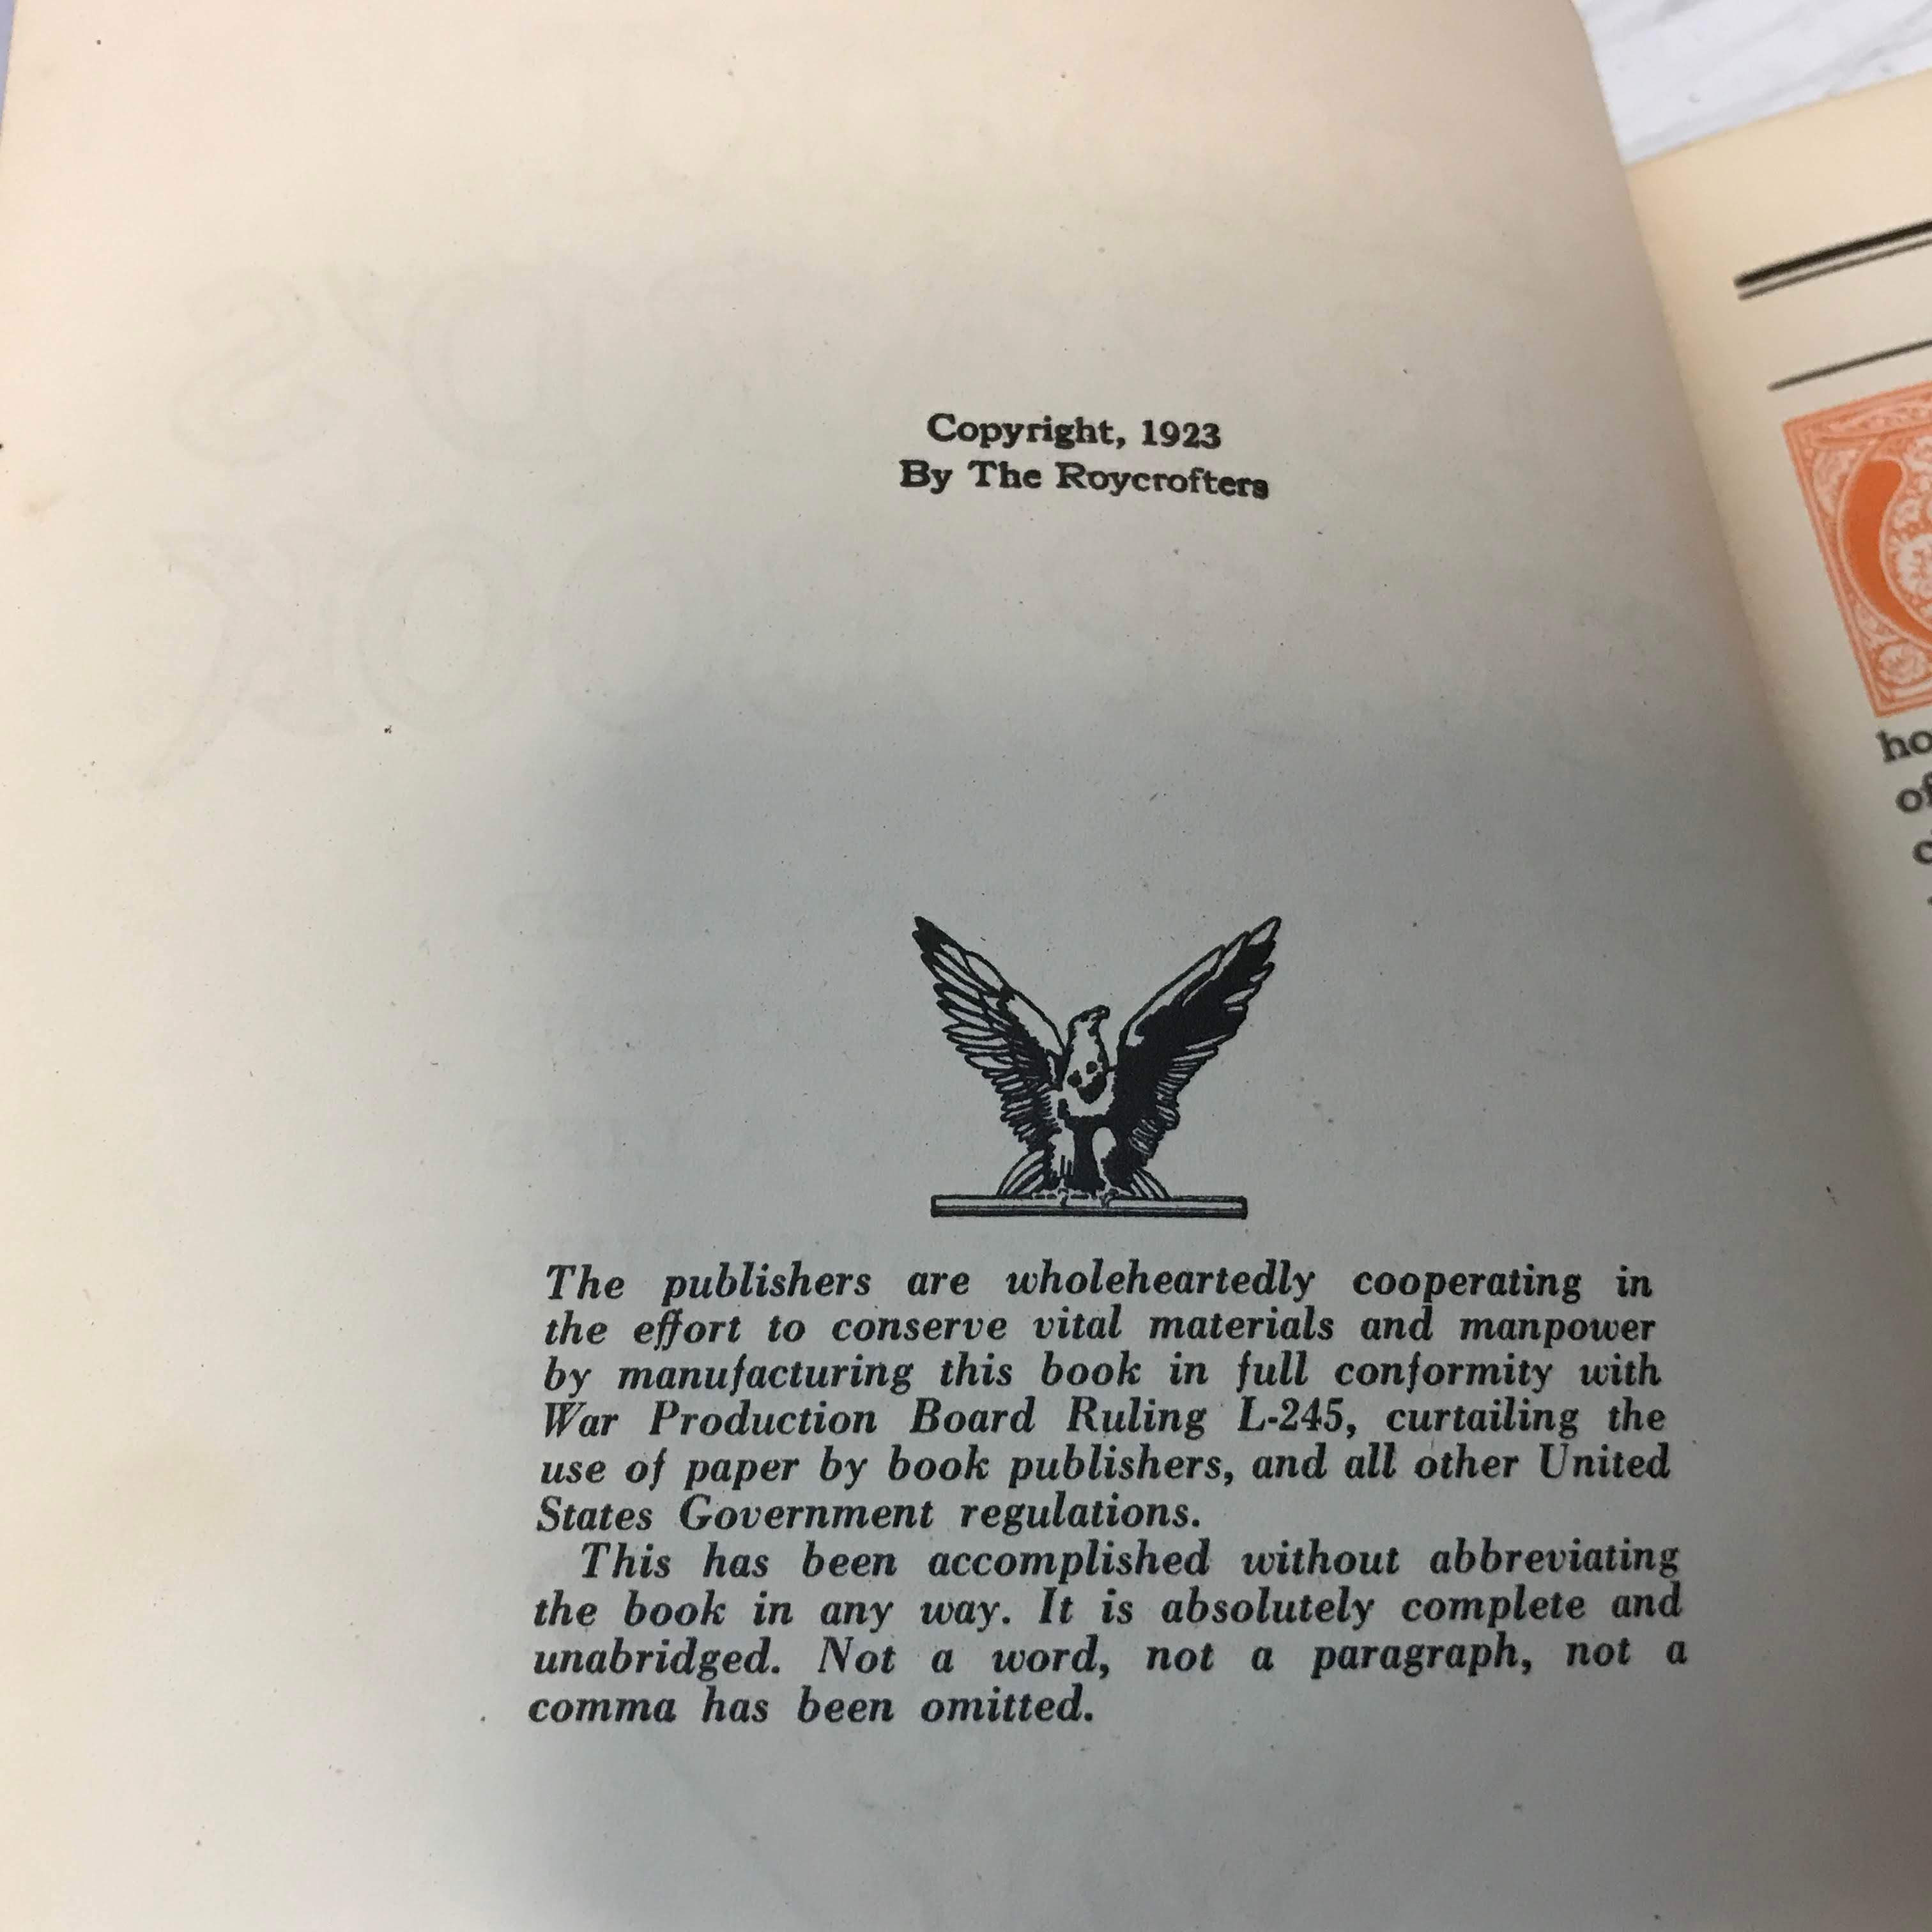 1923 “Elbert Hubbard’s Scrap Book” Hard Cover Book